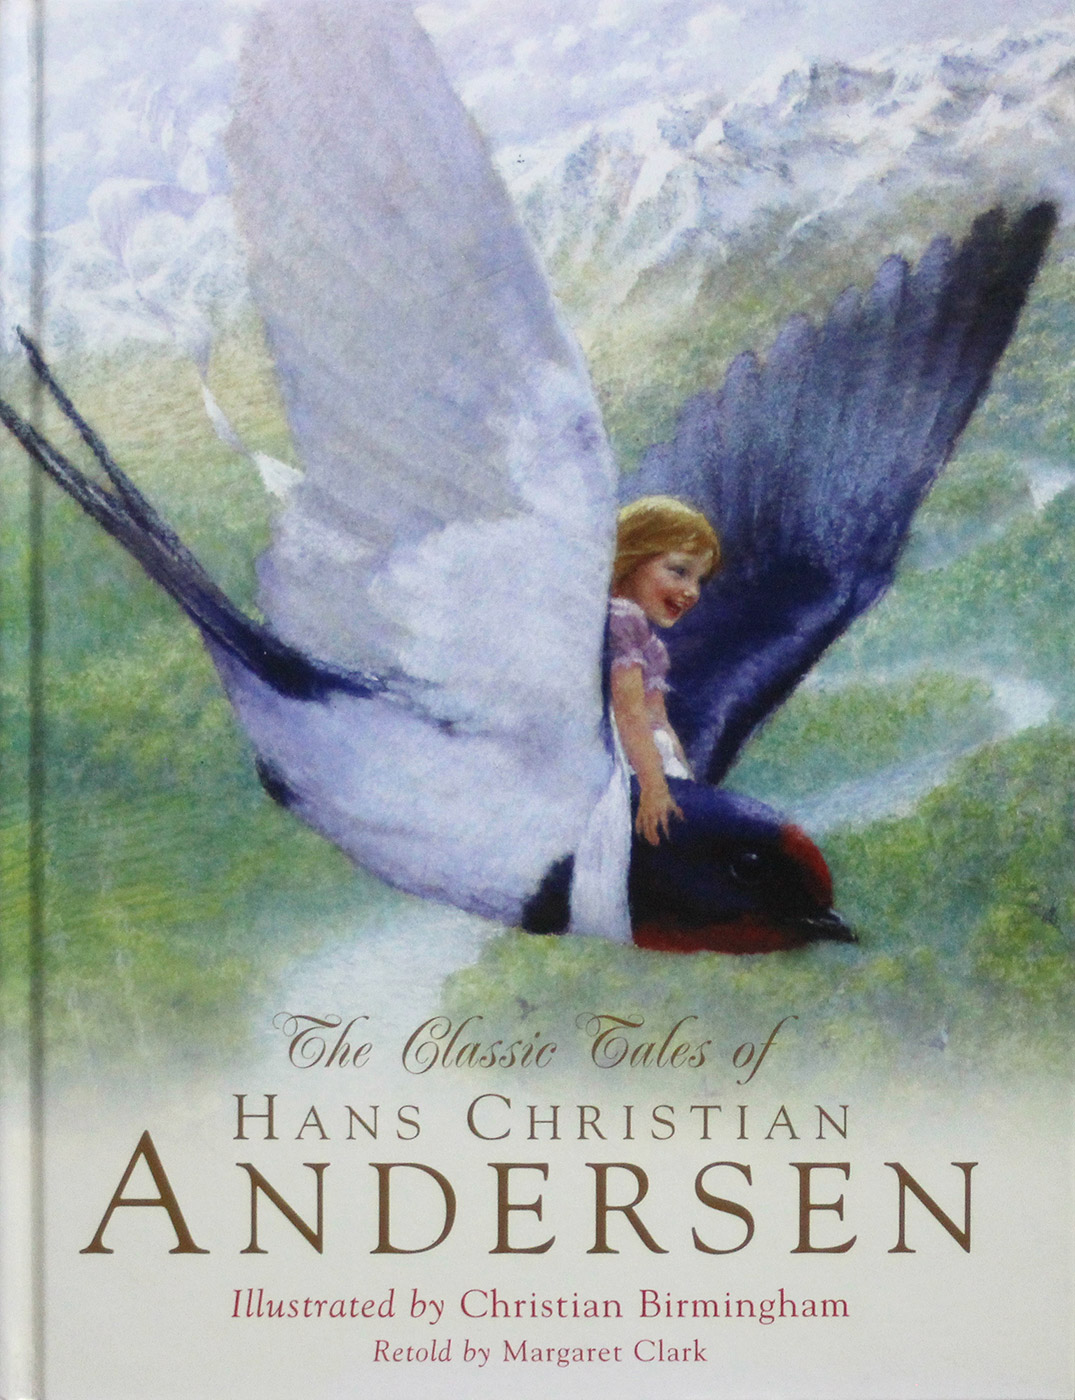 The Classic Tales of Hans Christian Andersen - Christian Birmingham ...